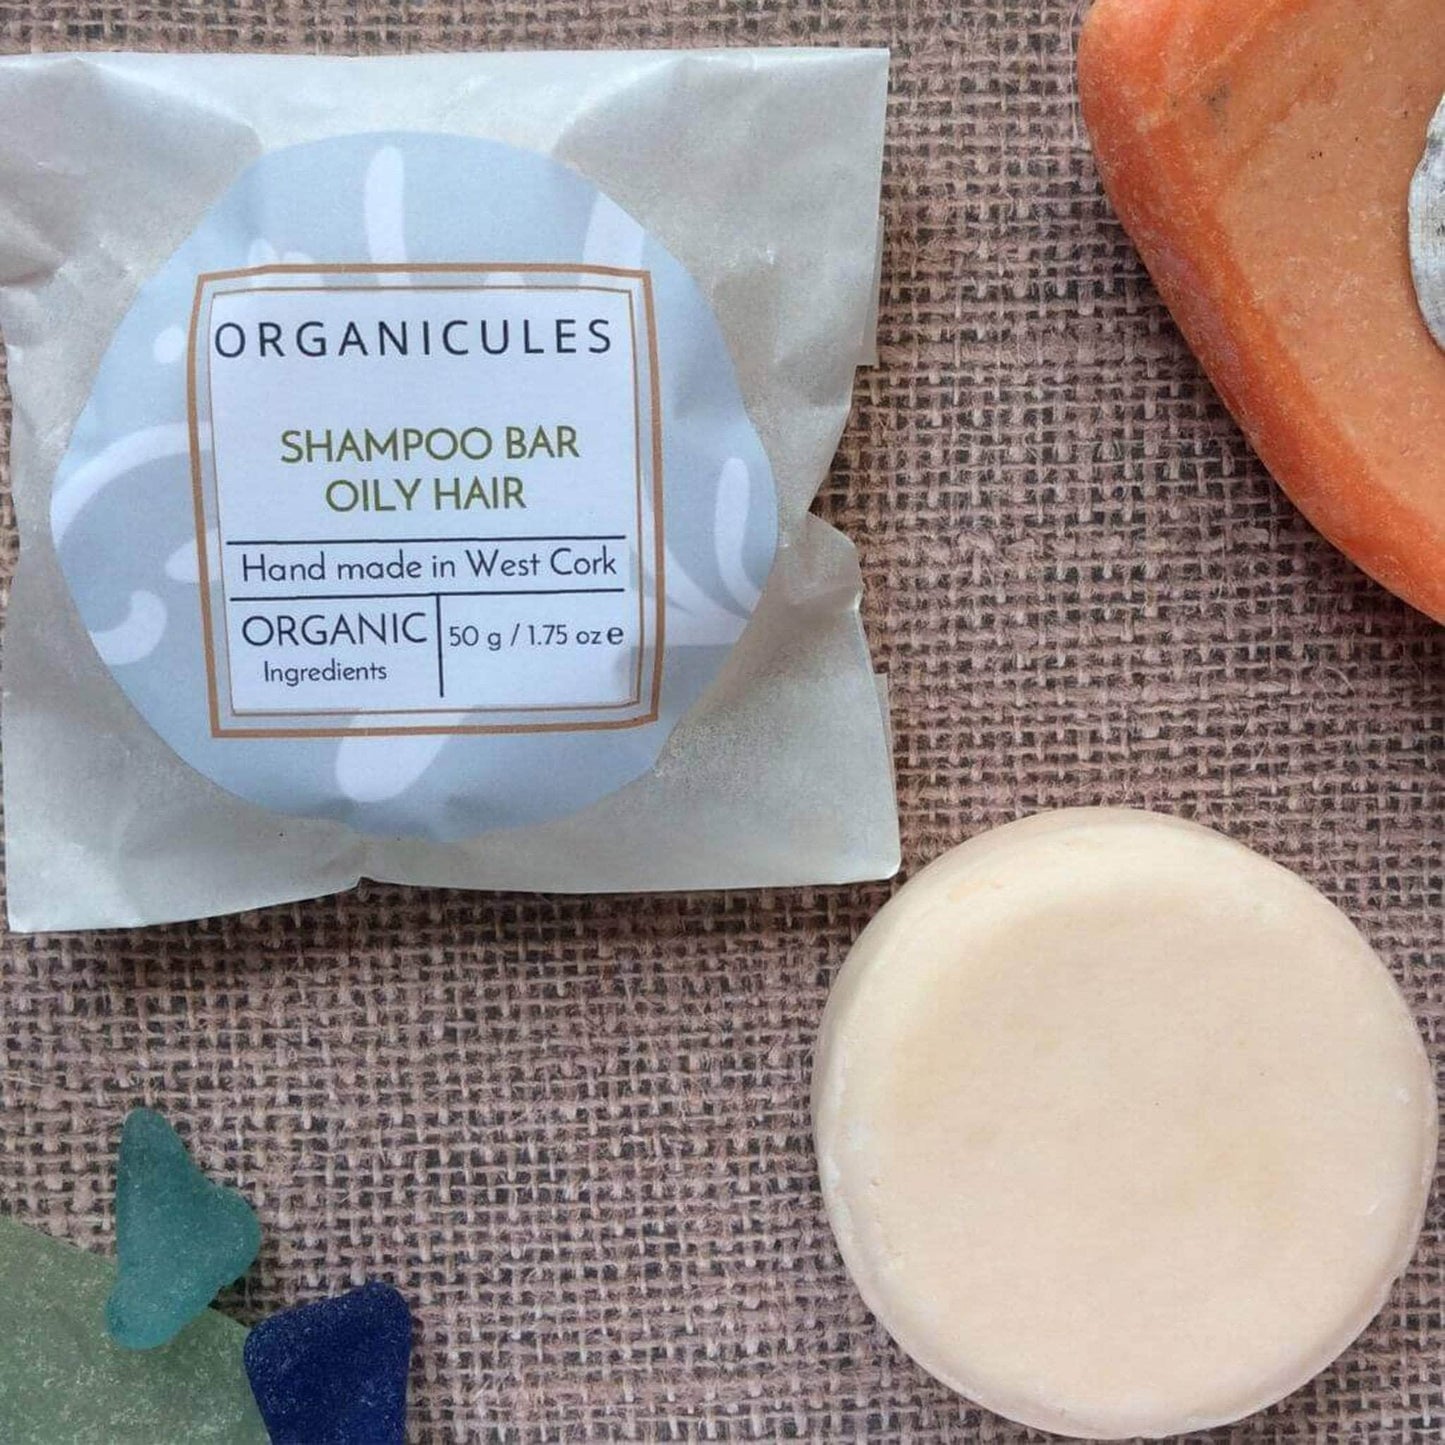 Organicules Shampoo Organicules Shampoo Bar in Compostable Bag - For Oily Hair - Organic Cedarwood & Peppermint